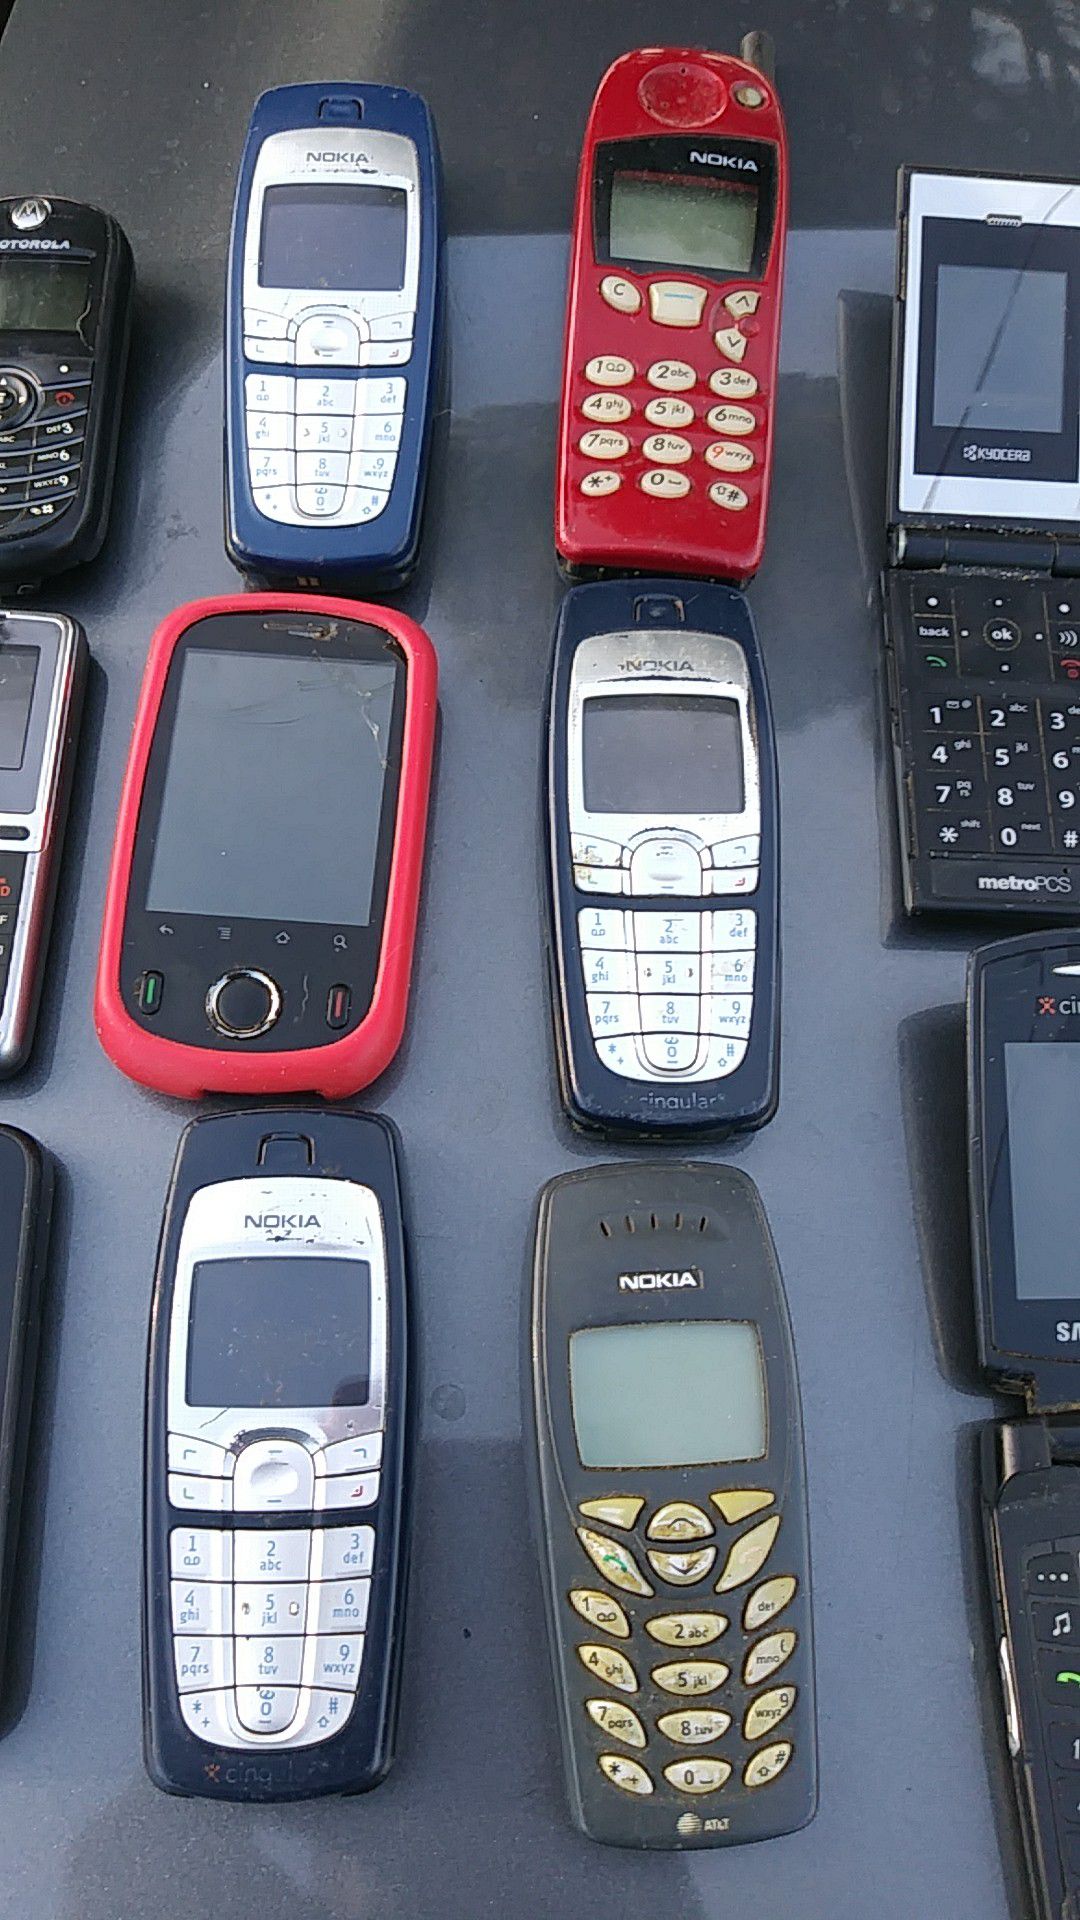 11 old phones..Nokia,Samsung,at&t,Kyocera, moterola